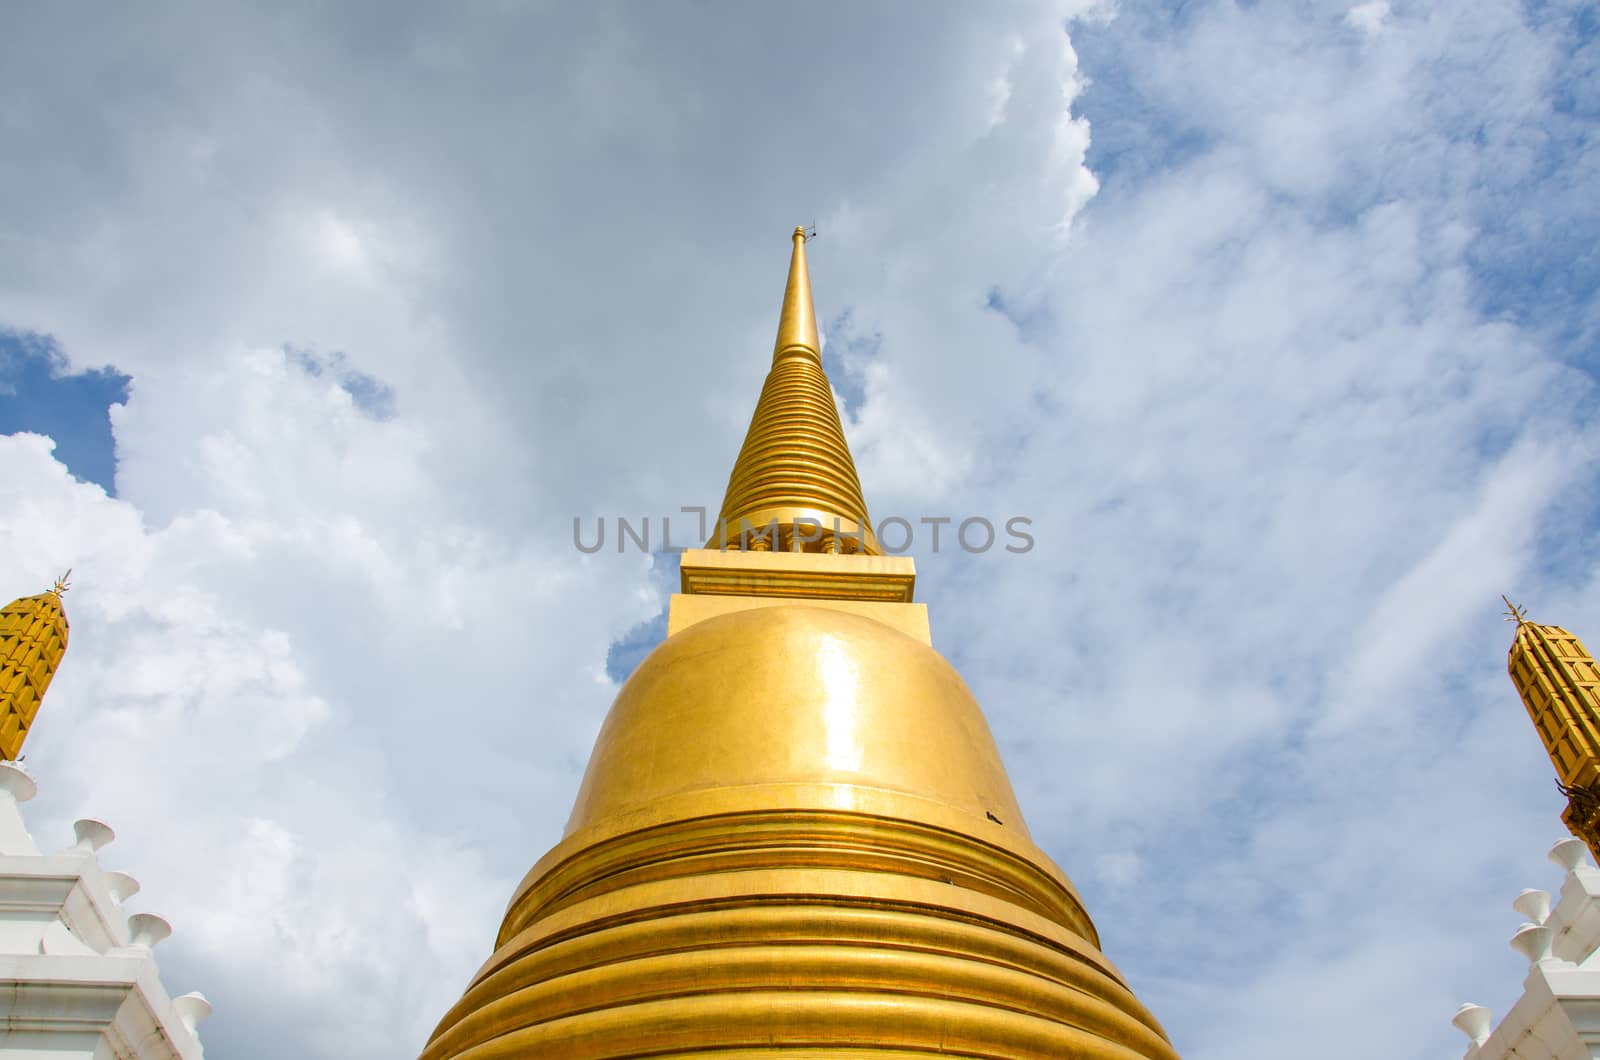 Golden Chedi Wat Bowonniwet Vihara, Bangkok, Thailand by migrean